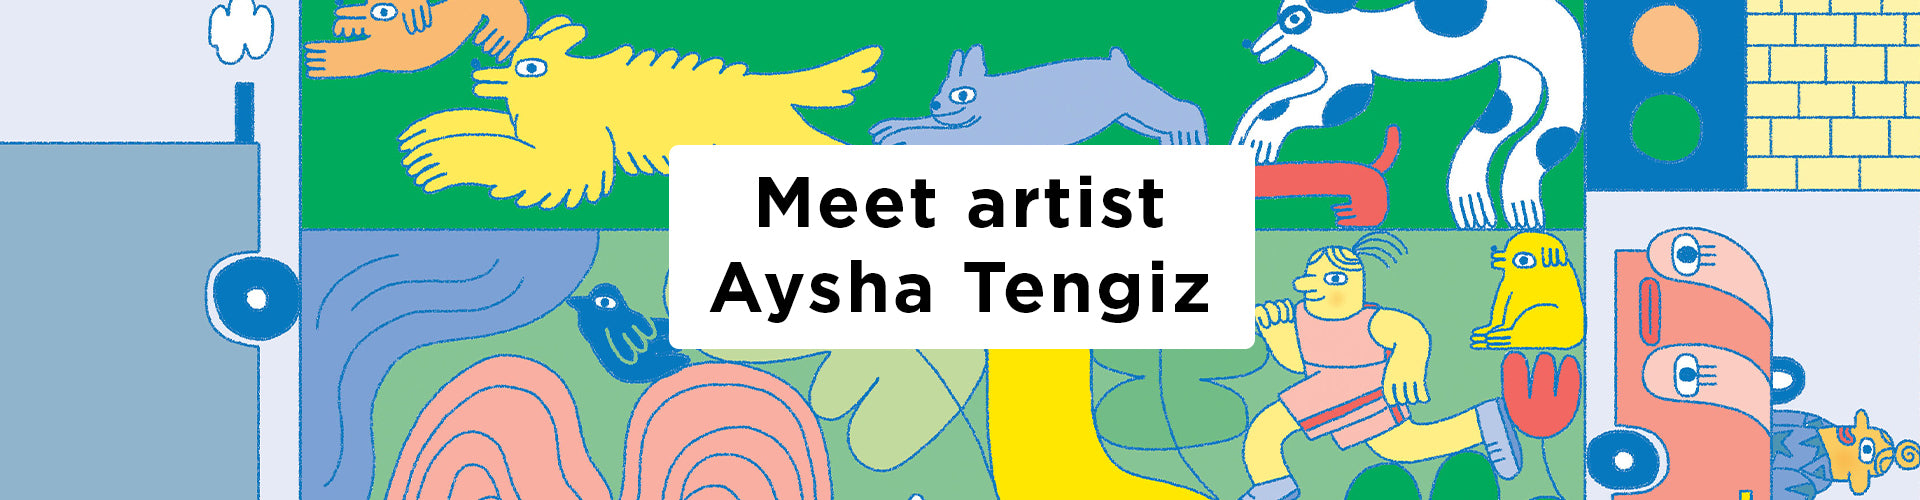 Meet artist Aysha Tengiz